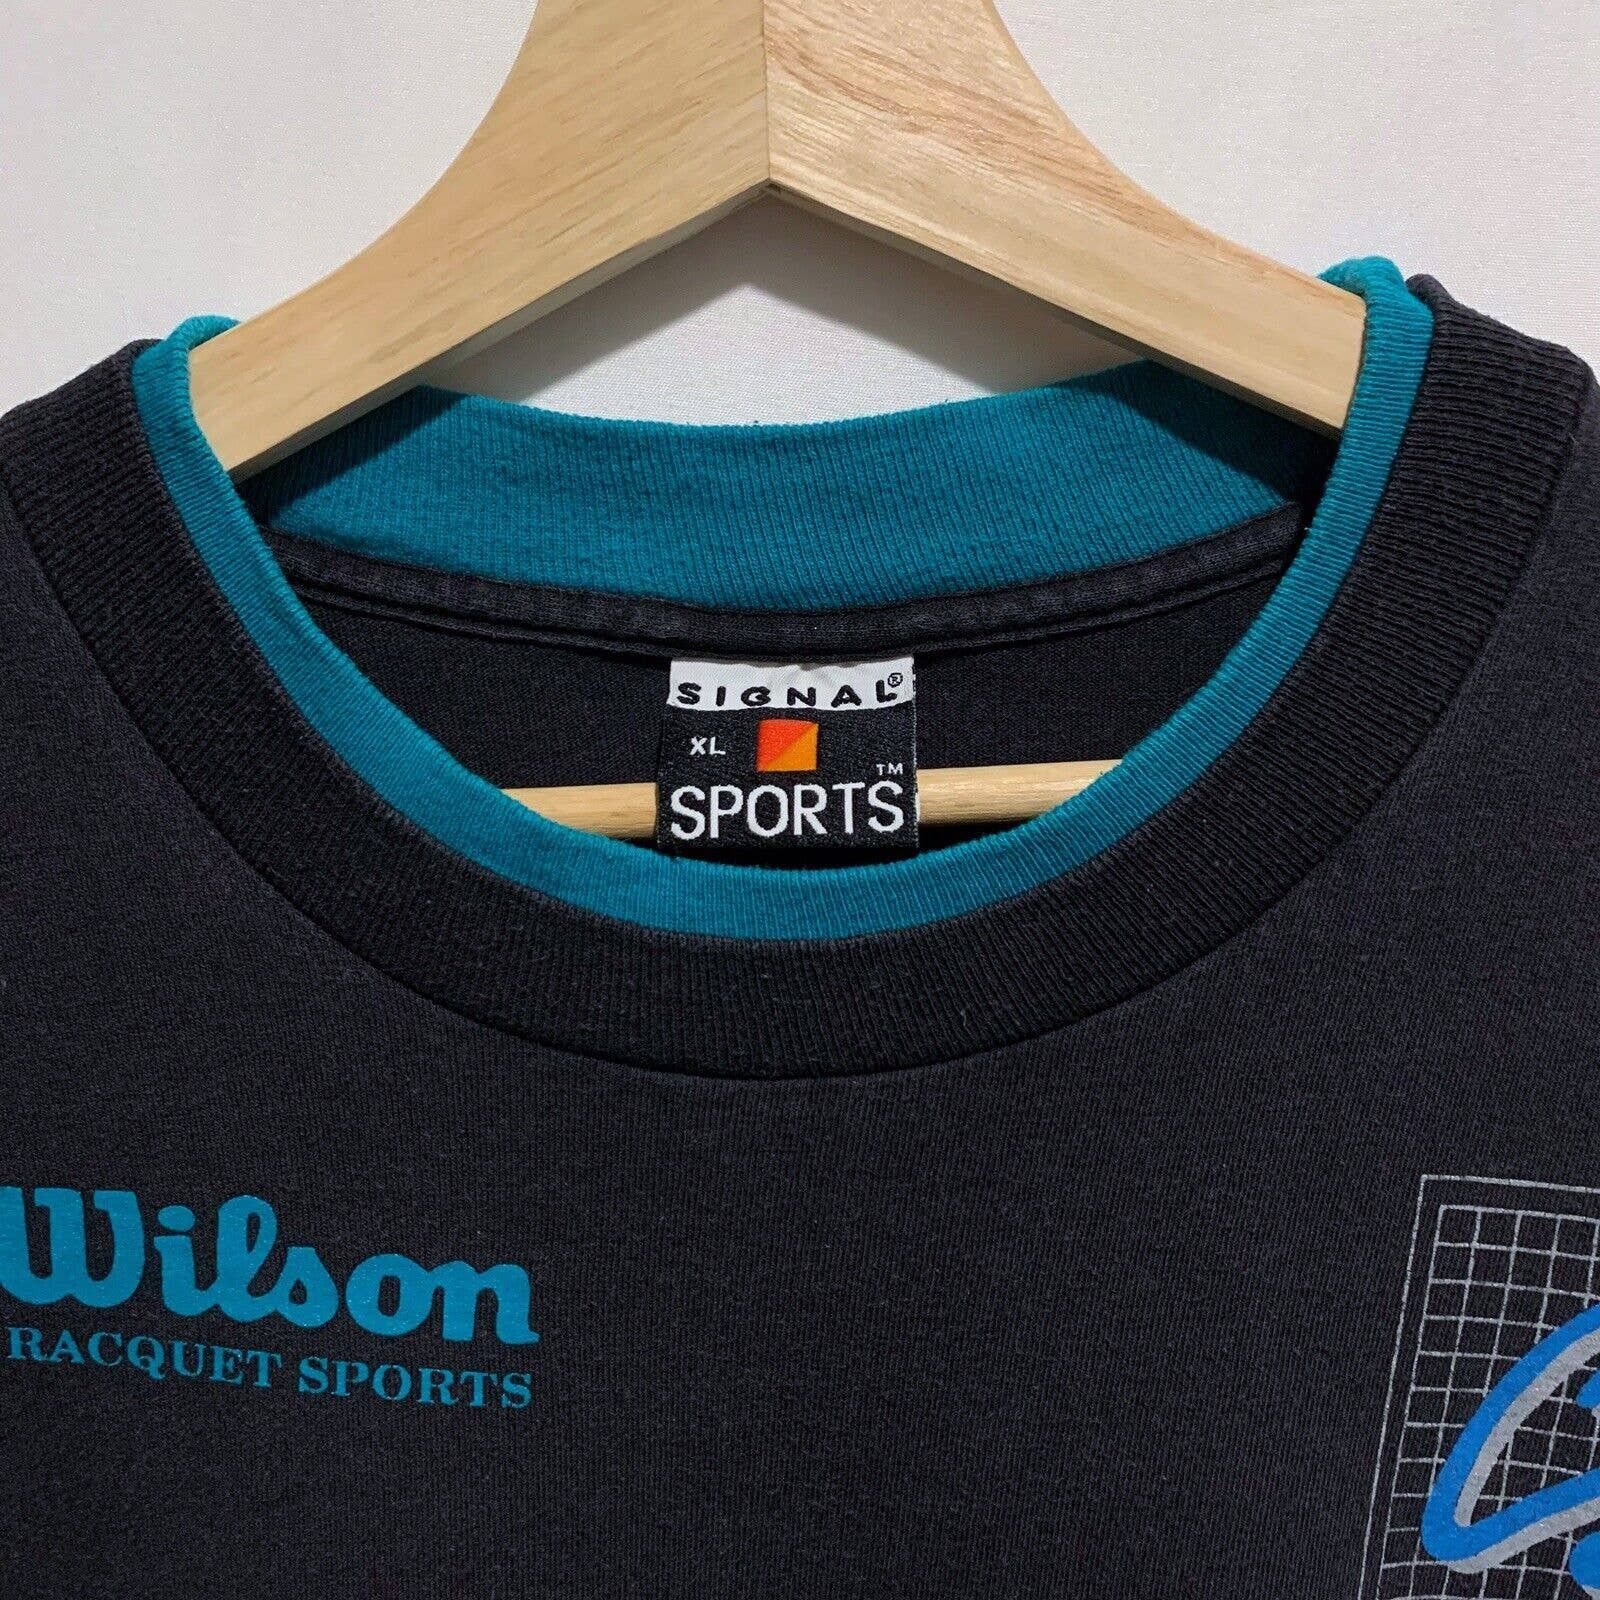 Vintage Vintage 90s Wilson Racquet Sports Rare T Shirt Size XL Black Size US XL / EU 56 / 4 - 5 Thumbnail